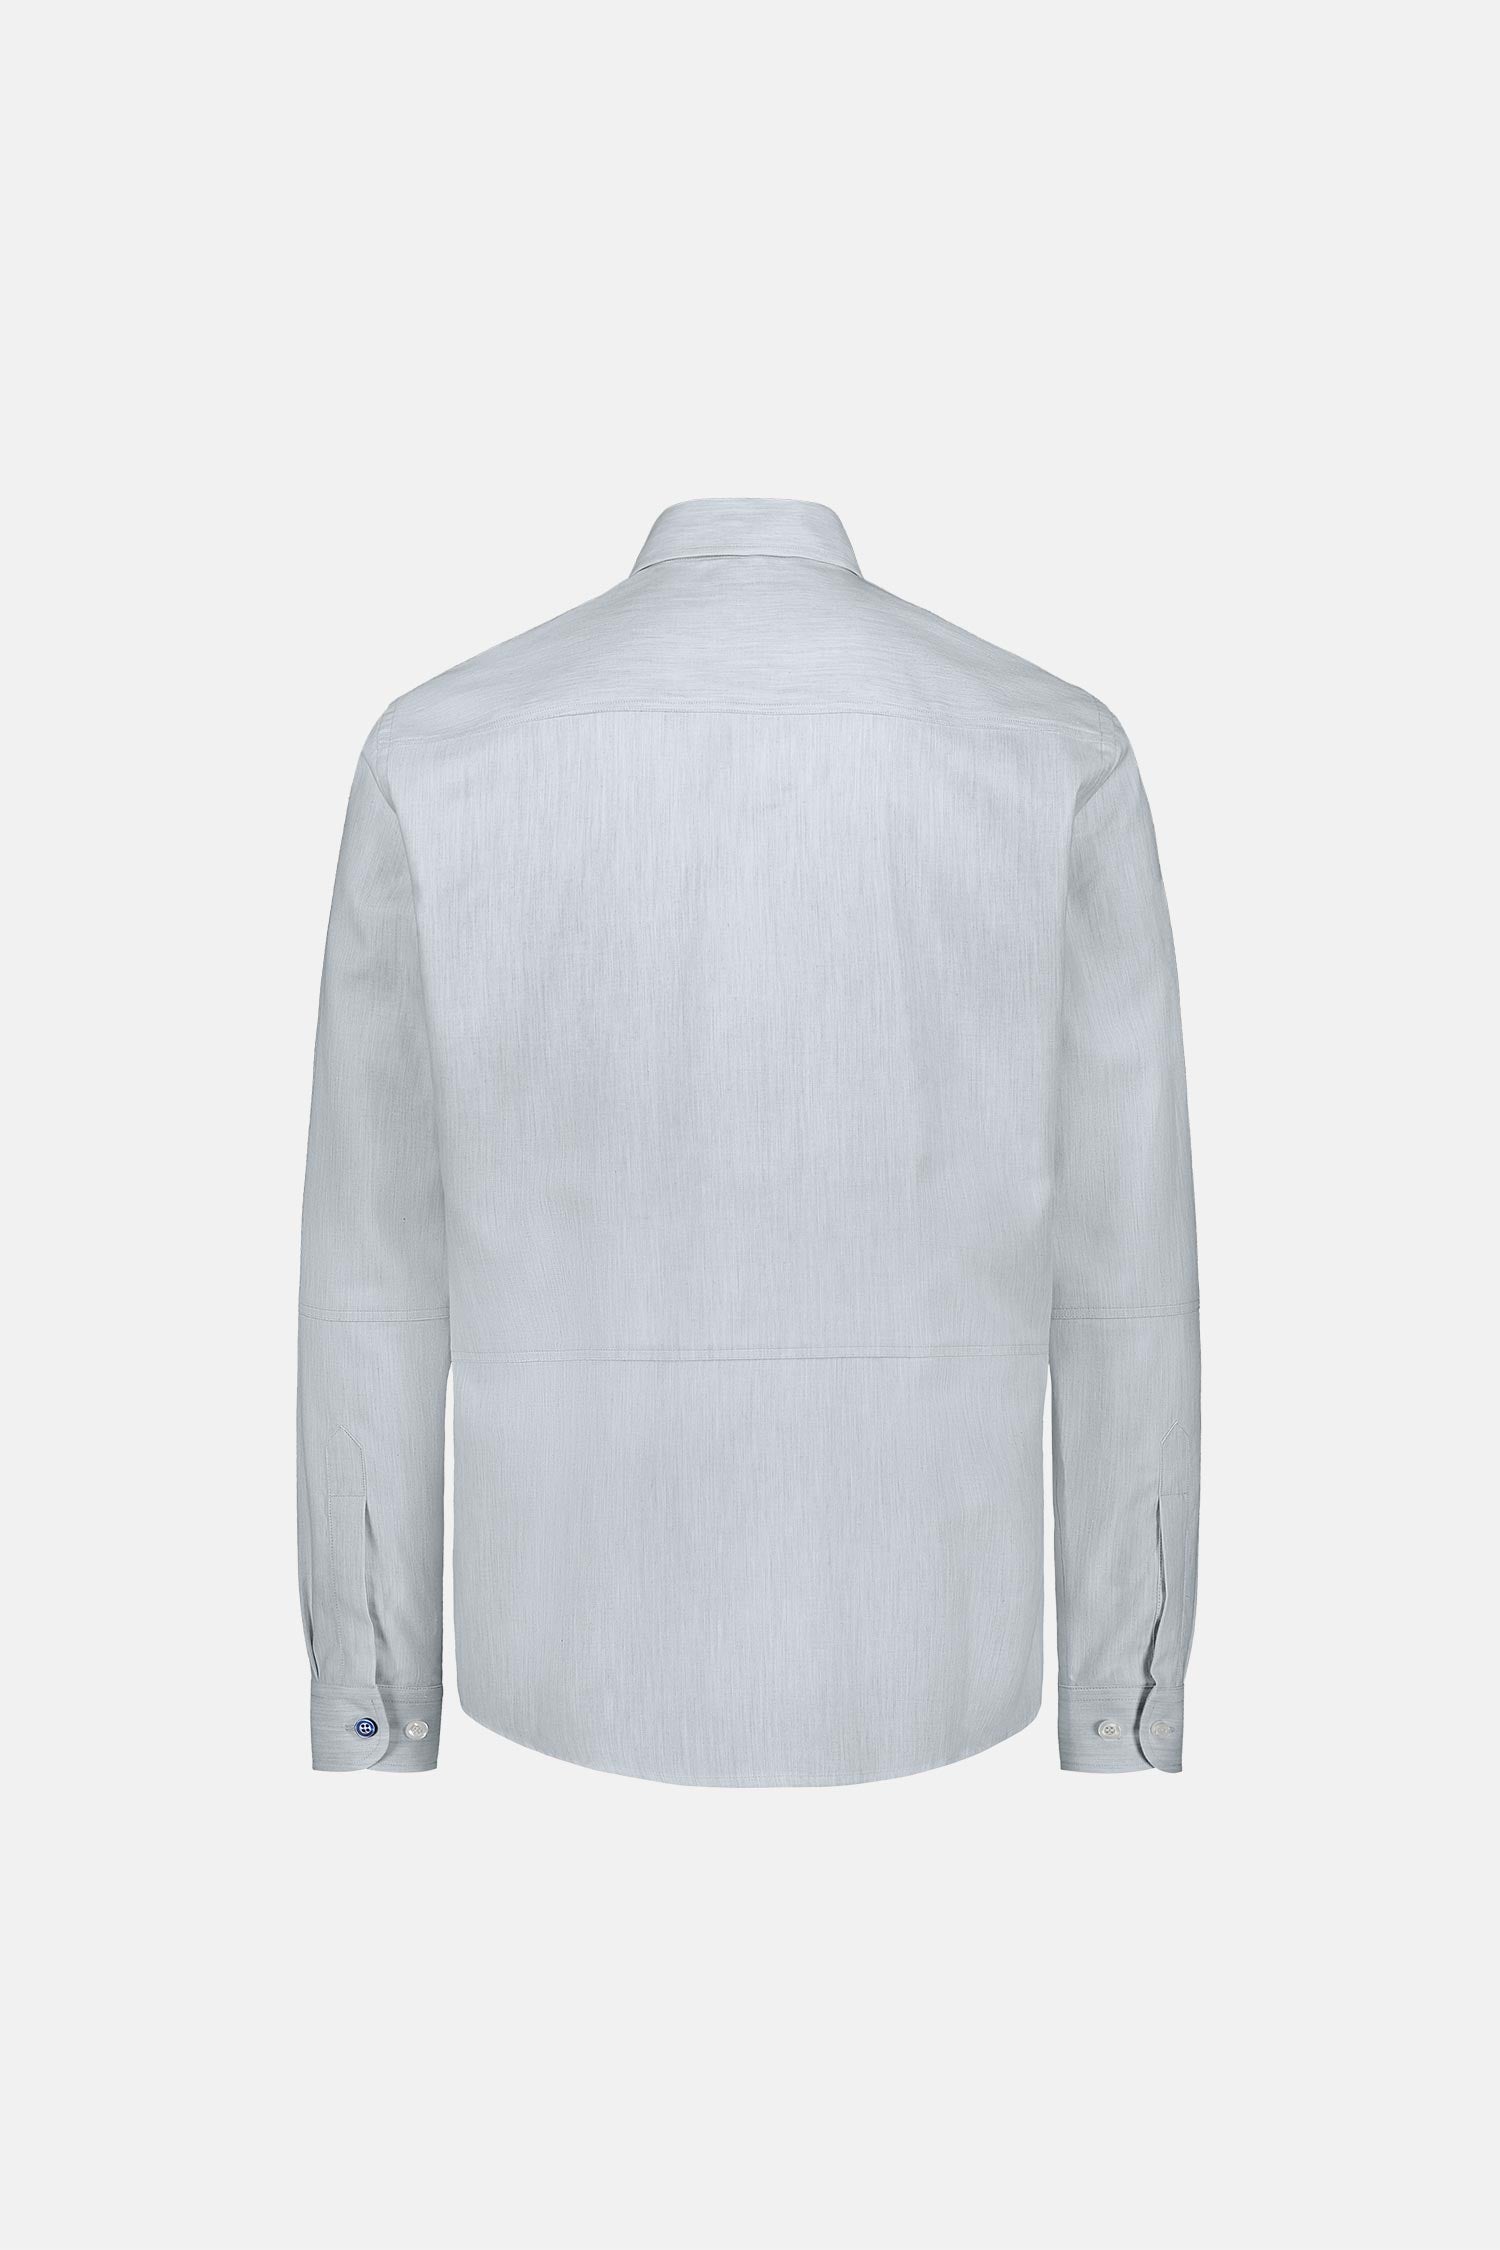 Frenn Alvar sustainable premium quality relaxed fit cotton shirt sky blue